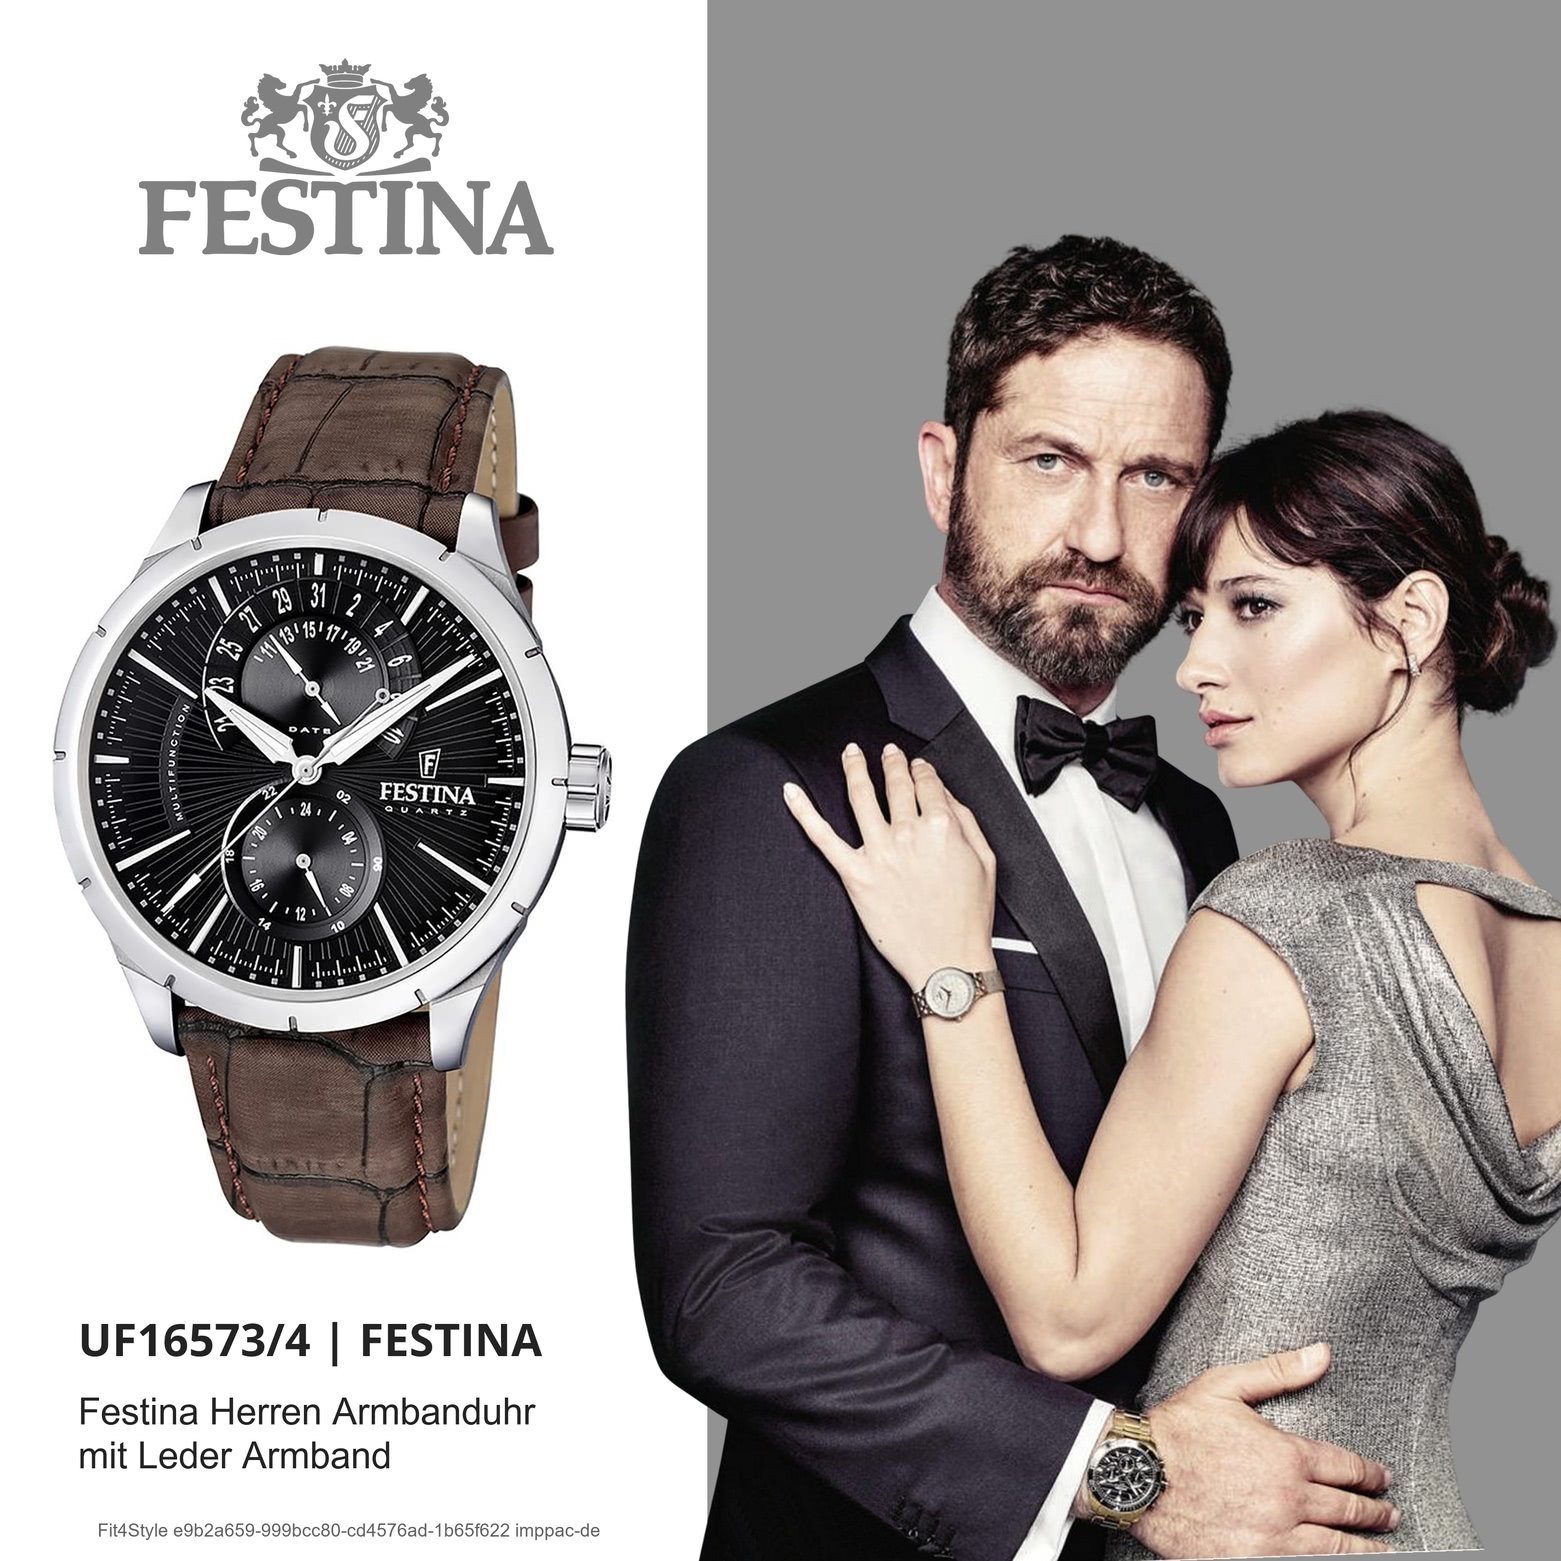 Festina Multifunktionsuhr UF16573/X Armbanduhr Herren schwarz braun-schwarz Festina Elegant Uhr Lederarmband rund, F16573/X, Herren